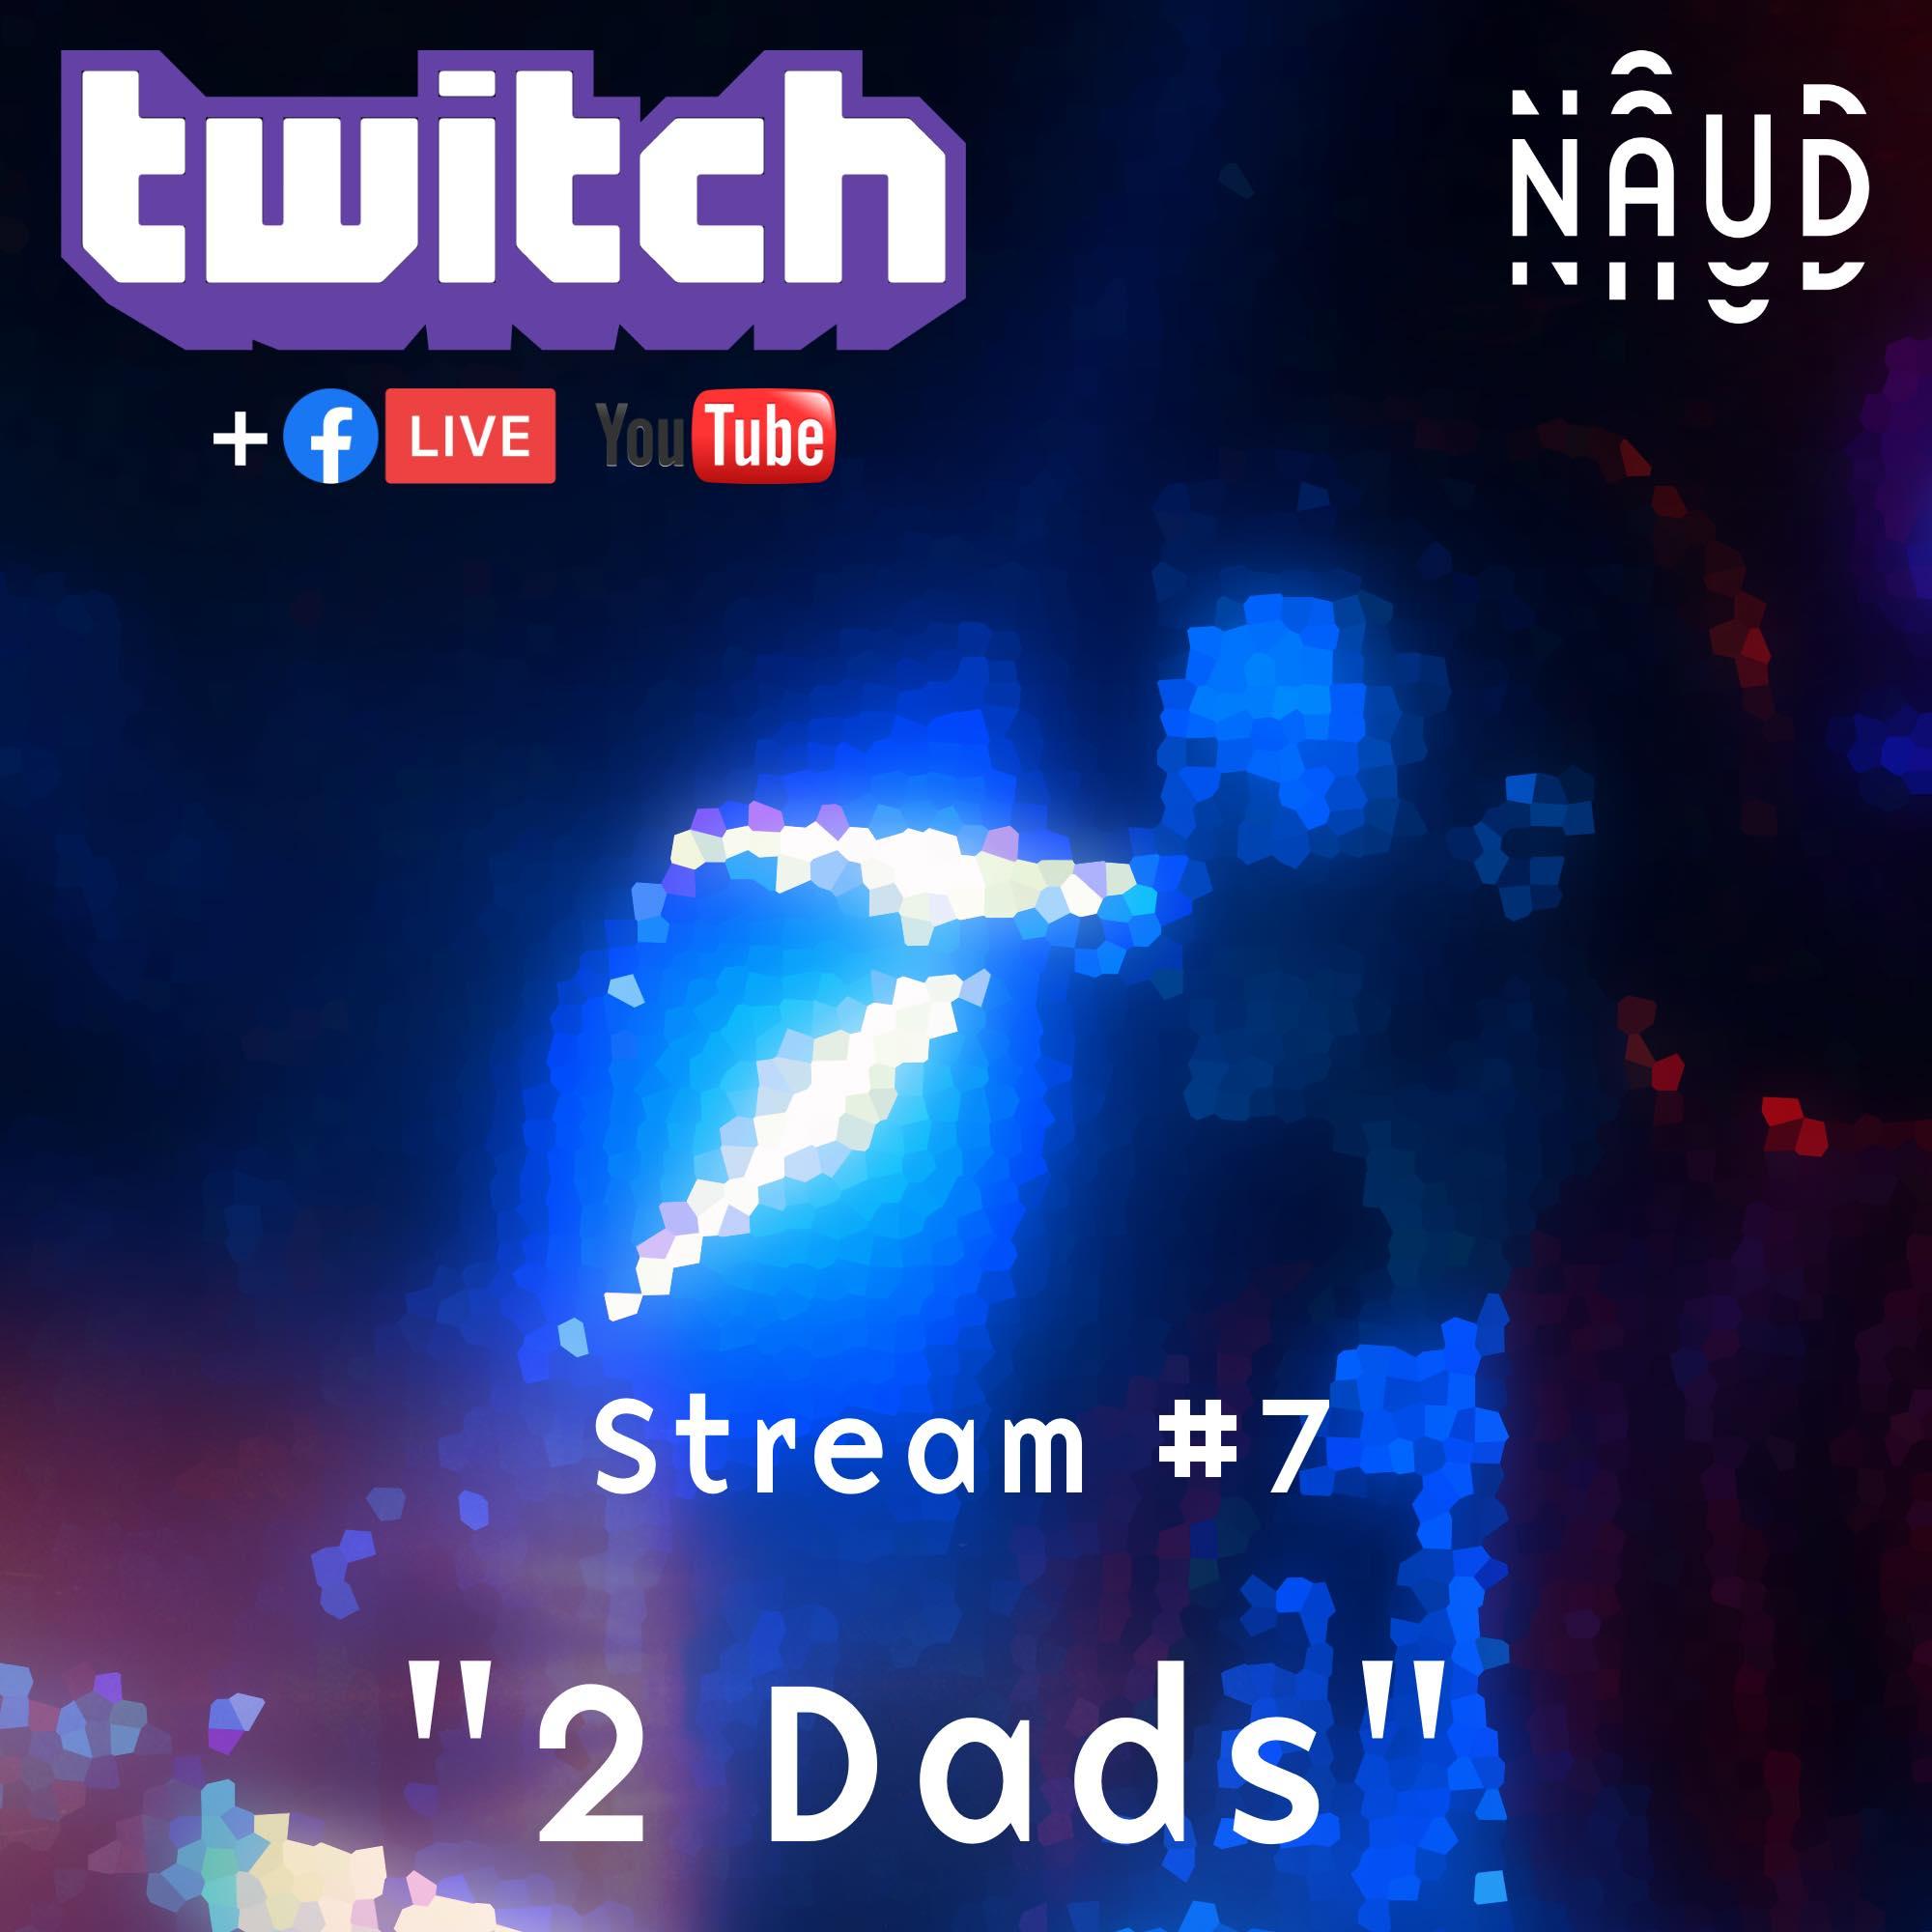 naud 2 dads stream